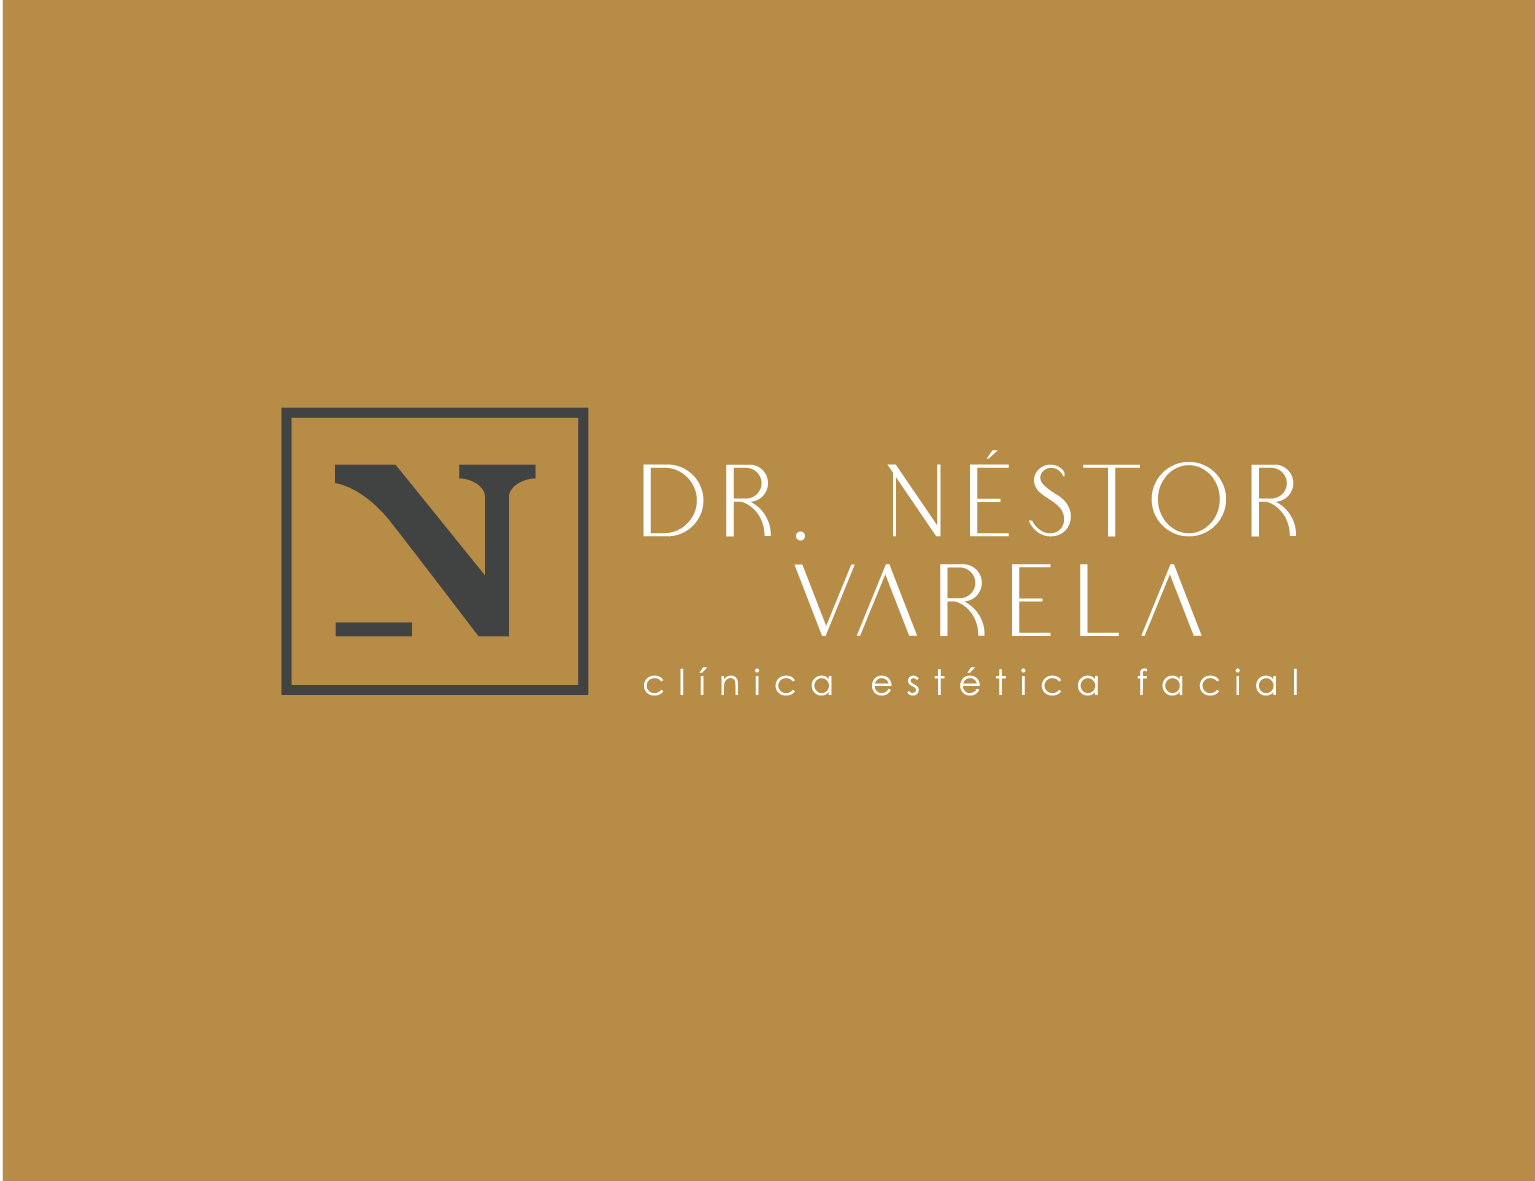 Néstor Varela